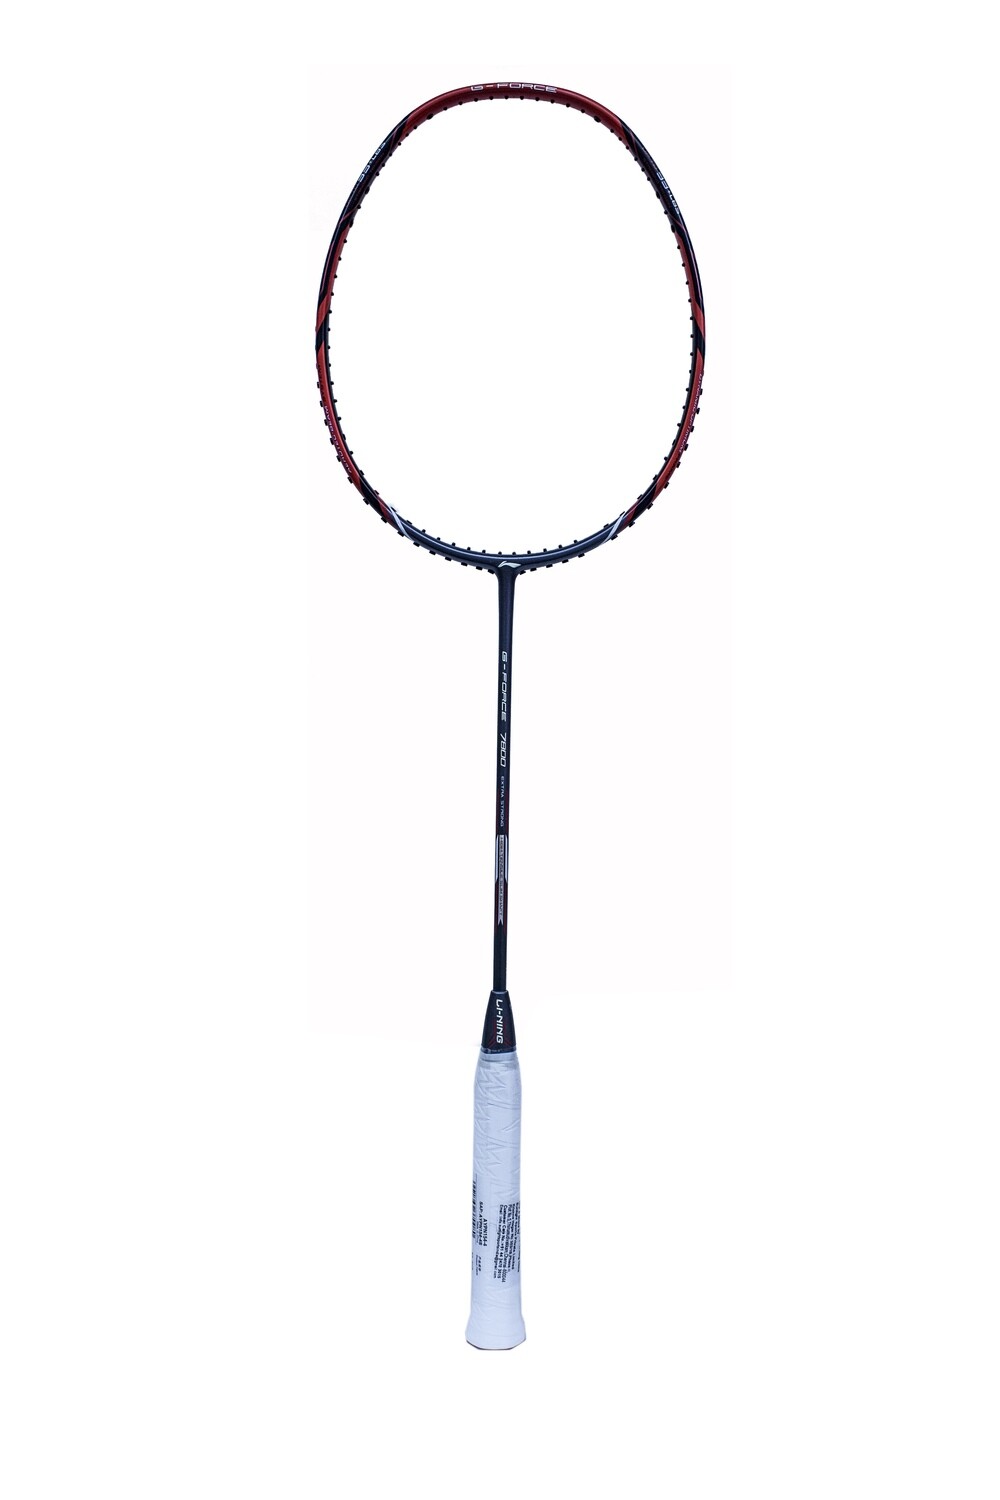 LI-NING G-Force 7800 Badminton Racquet -